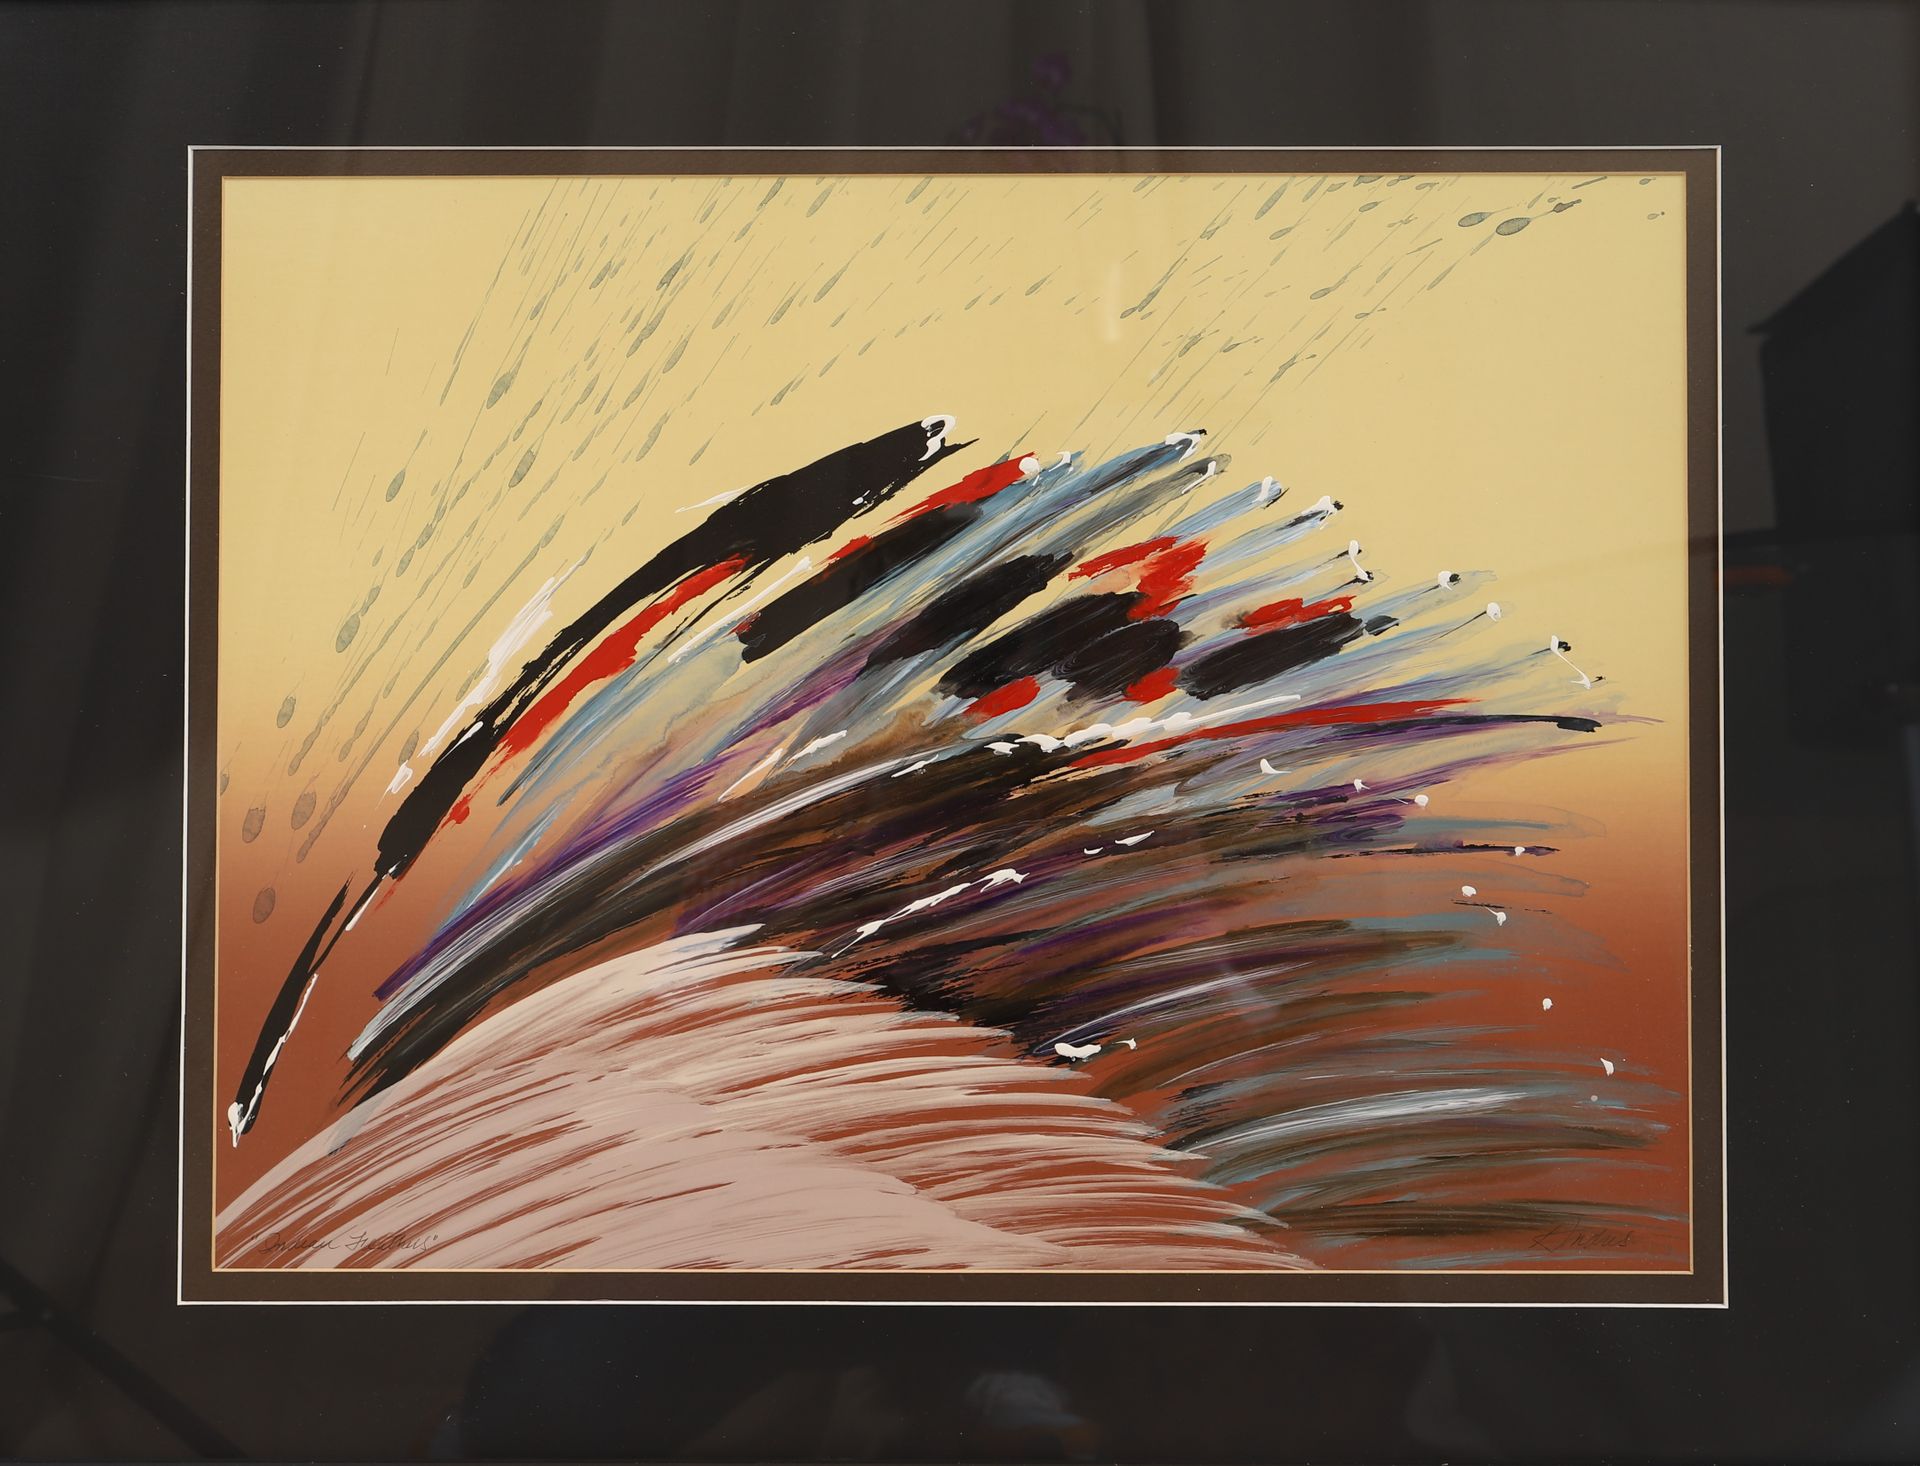 Null "Indian Heathers" de KRAUS Henri (né en 1943)

Artiste peintre Luxembourgeo&hellip;